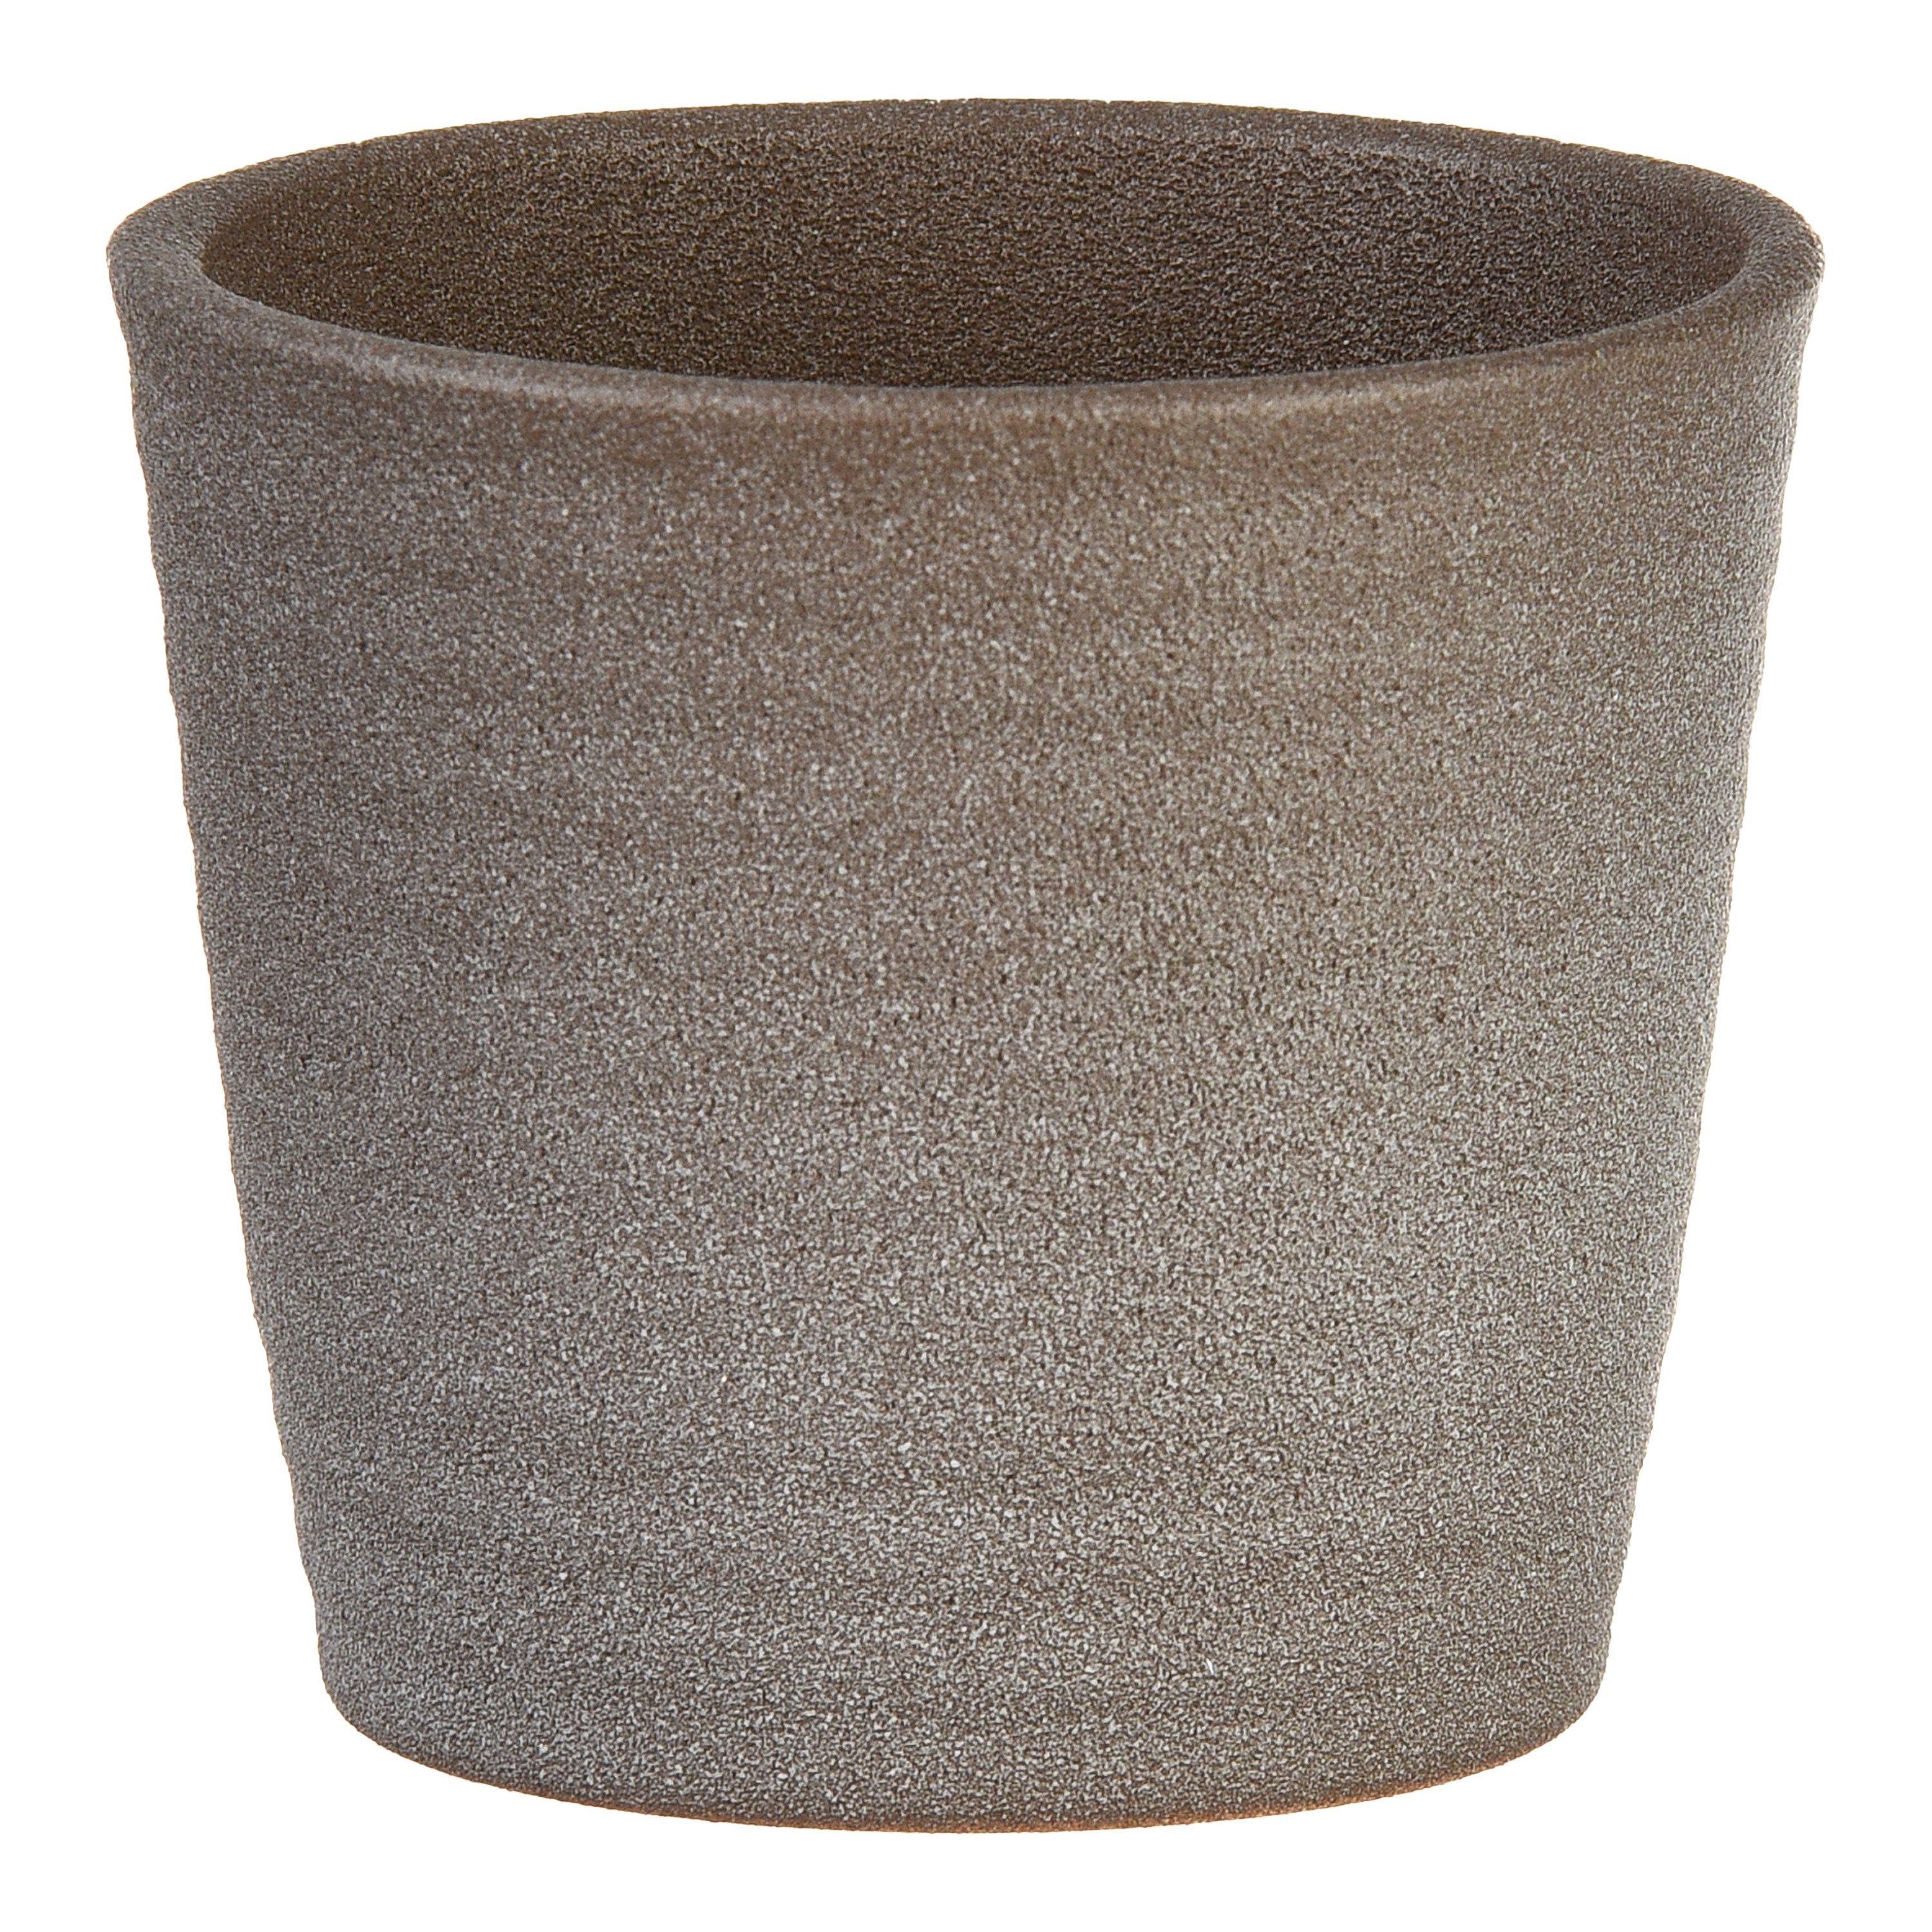 Übertopf Zentimeter 7 Grau 1 aus 6 Keramik, Ø Stone (Packung, Übertopf), Übertopf H Nature Zentimeter, Depot